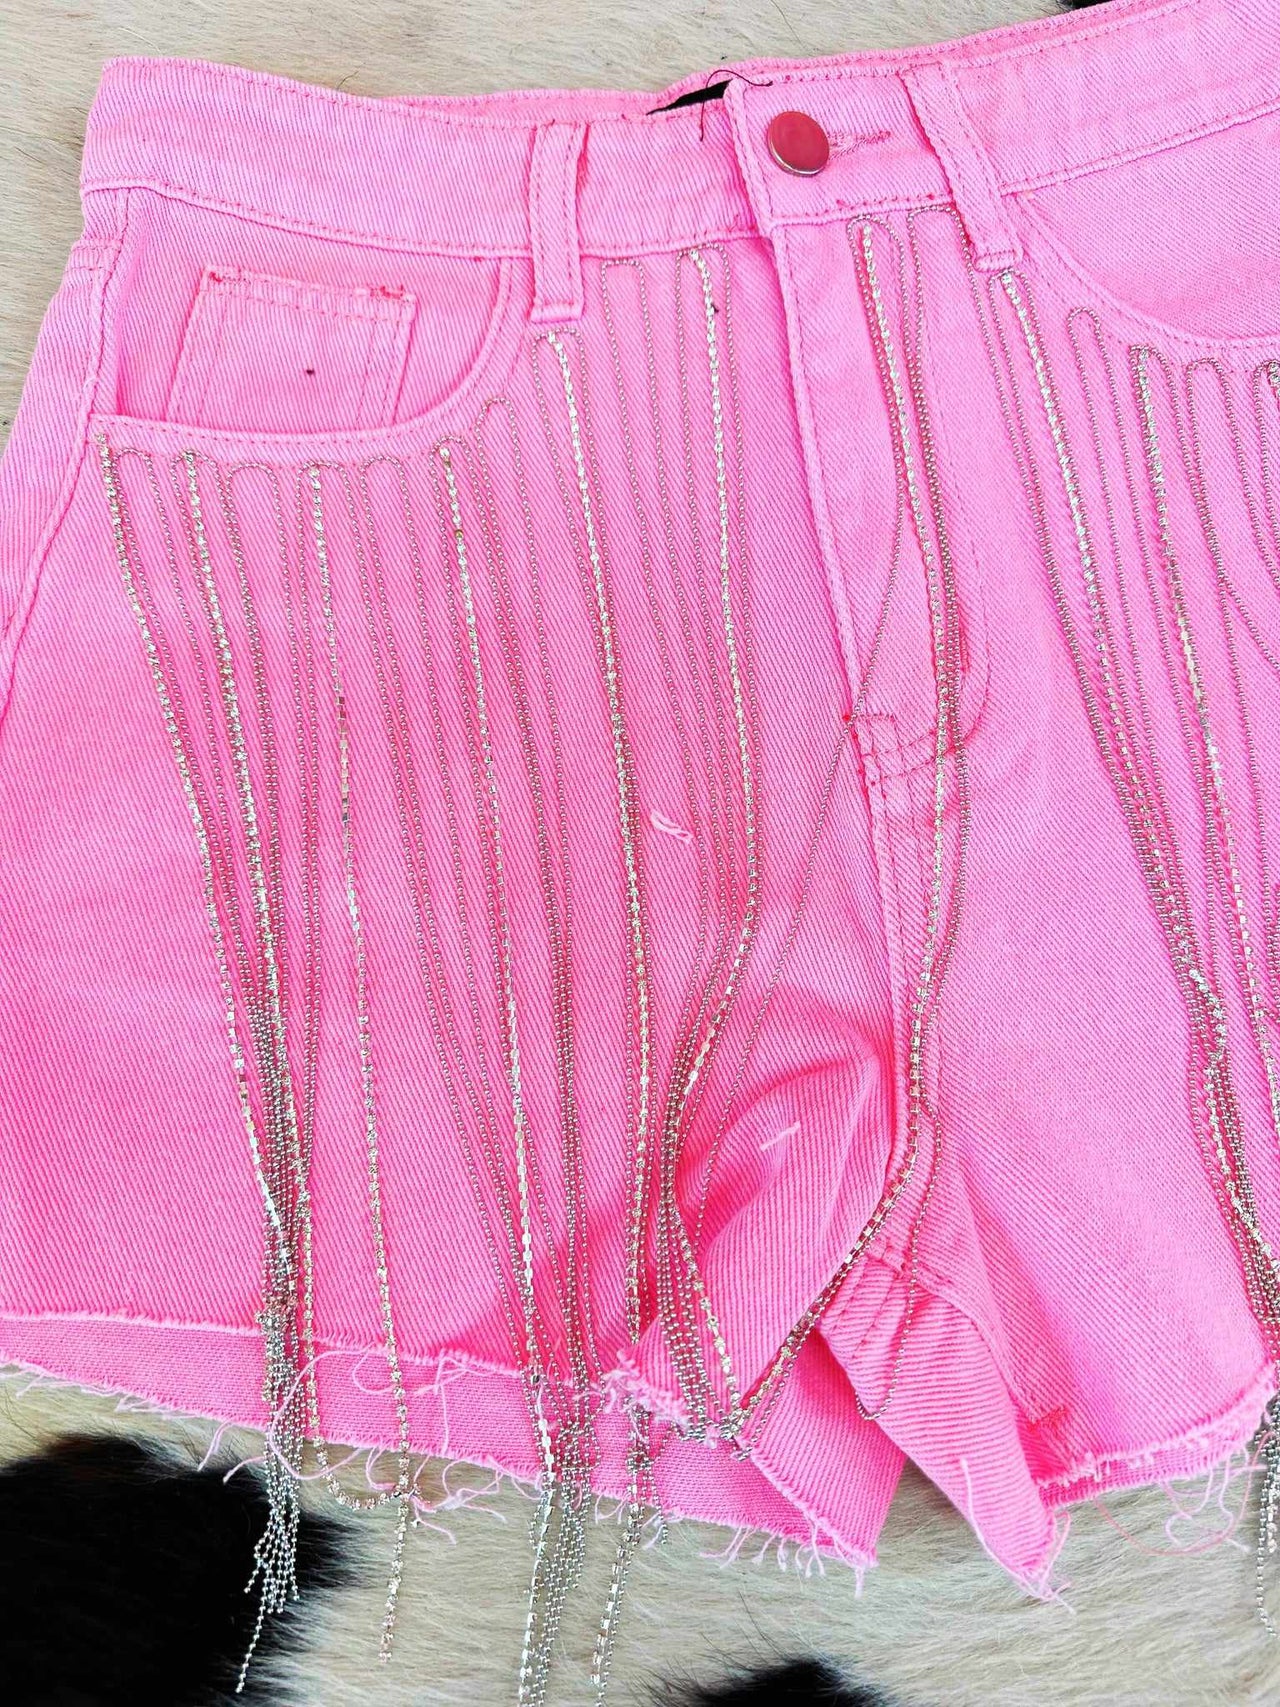 Pink jean shorts with rhinestone fringe